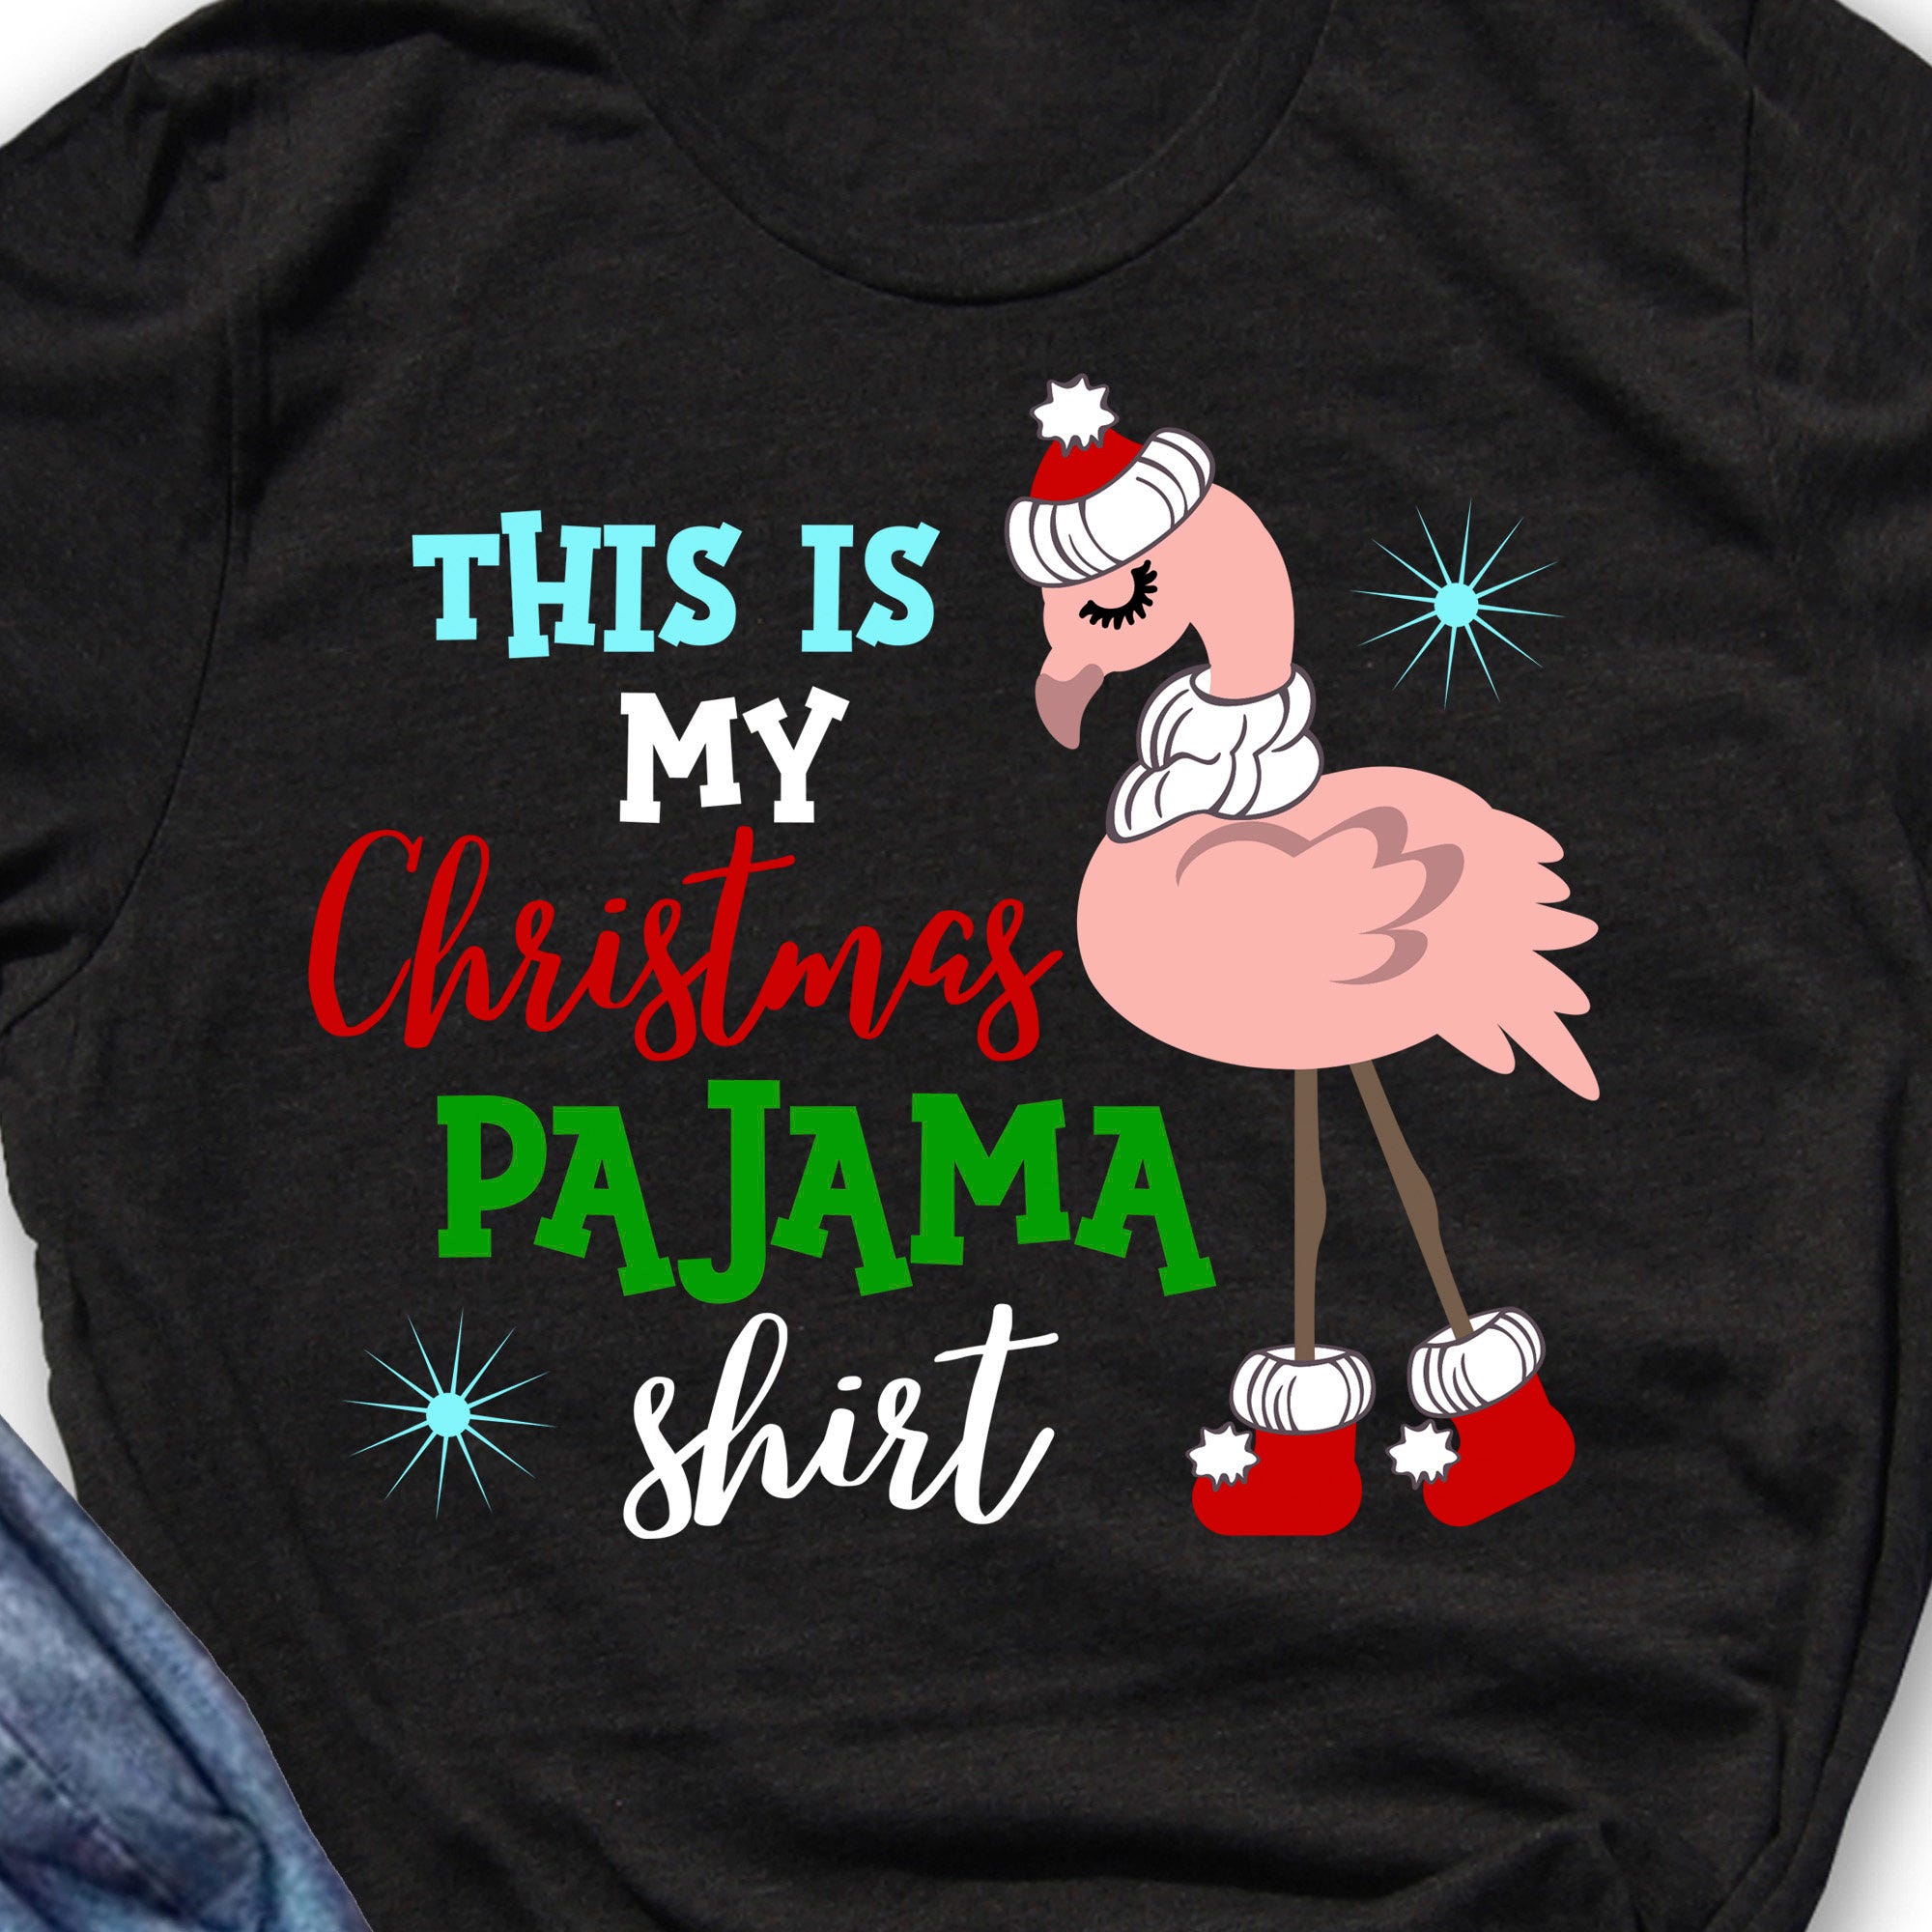 Christmas Flamingo svg This is my christmas pajama shirt quote svg Winter hat png Xmas ornaments Cricut designs